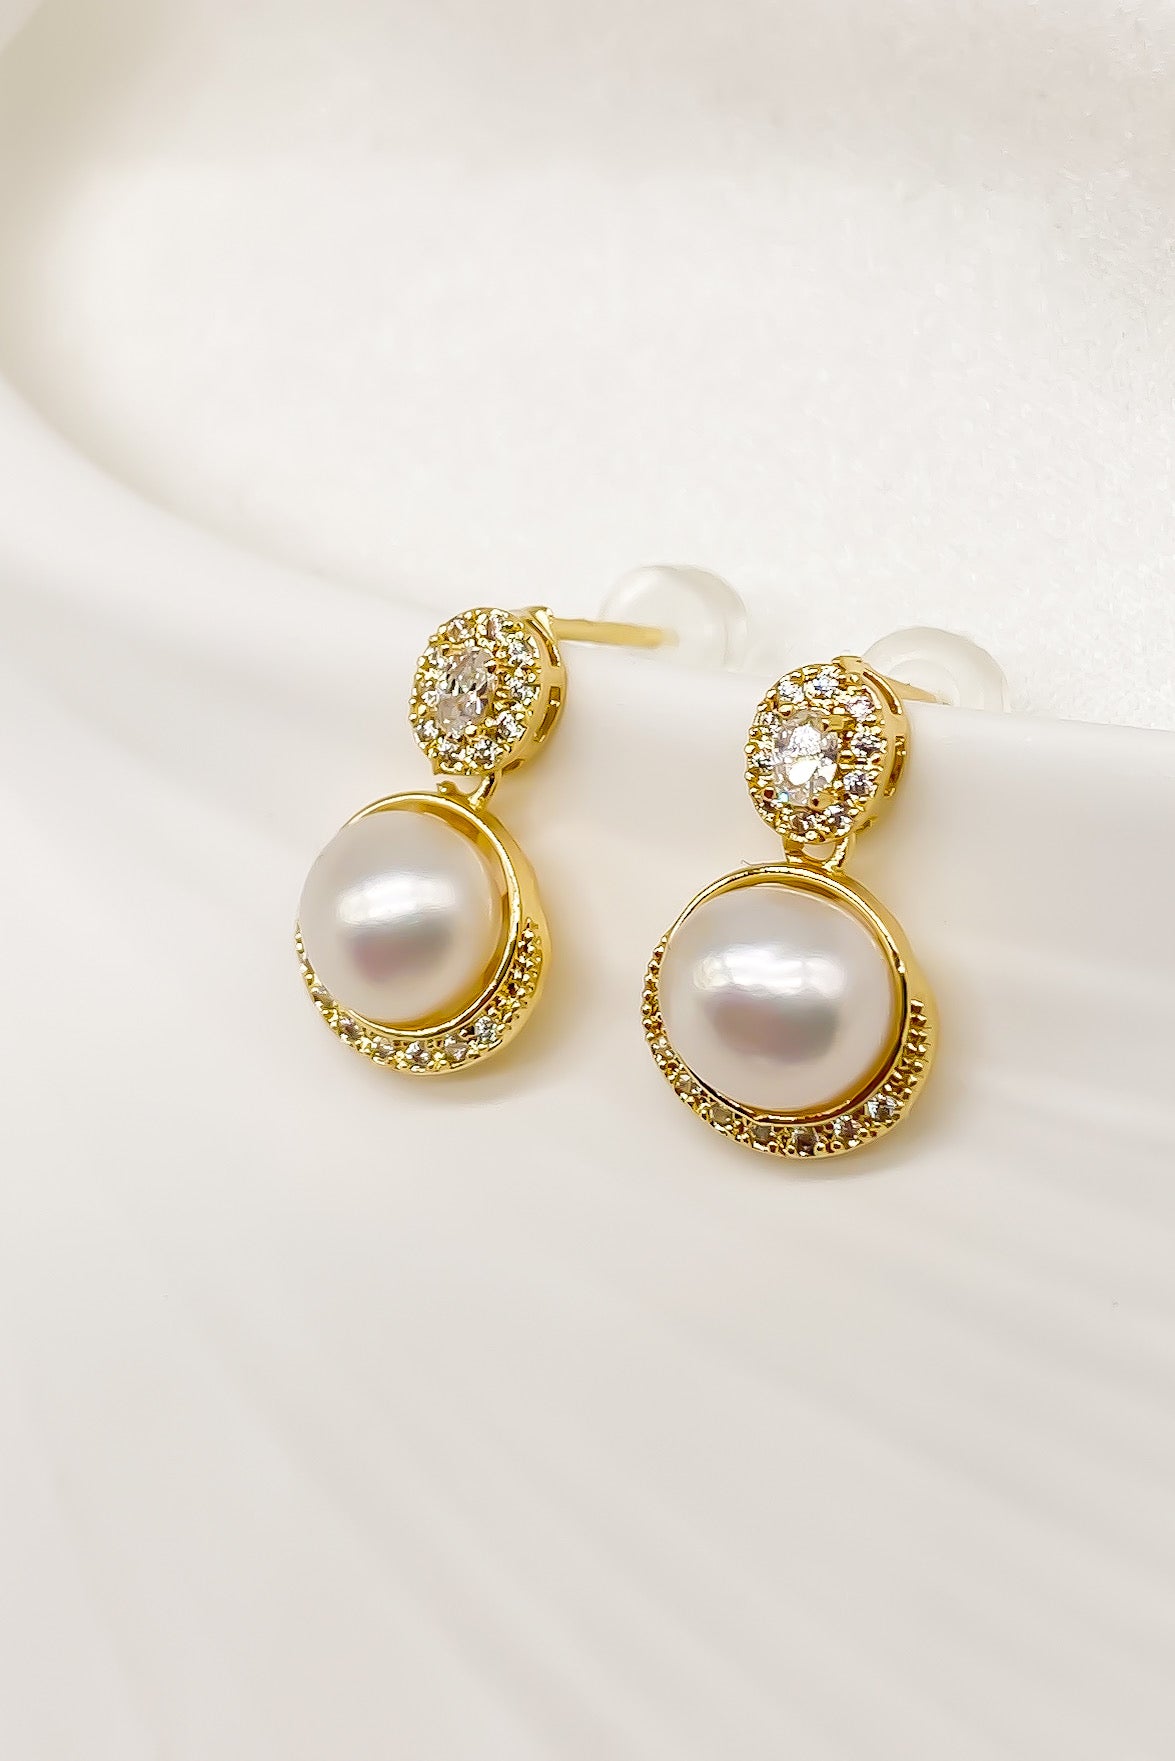 SKYE Shop Chic Modern Elegant Classy Women Jewelry French Parisian Minimalist Ayda Freshwater Pearl Drop Earrings 10